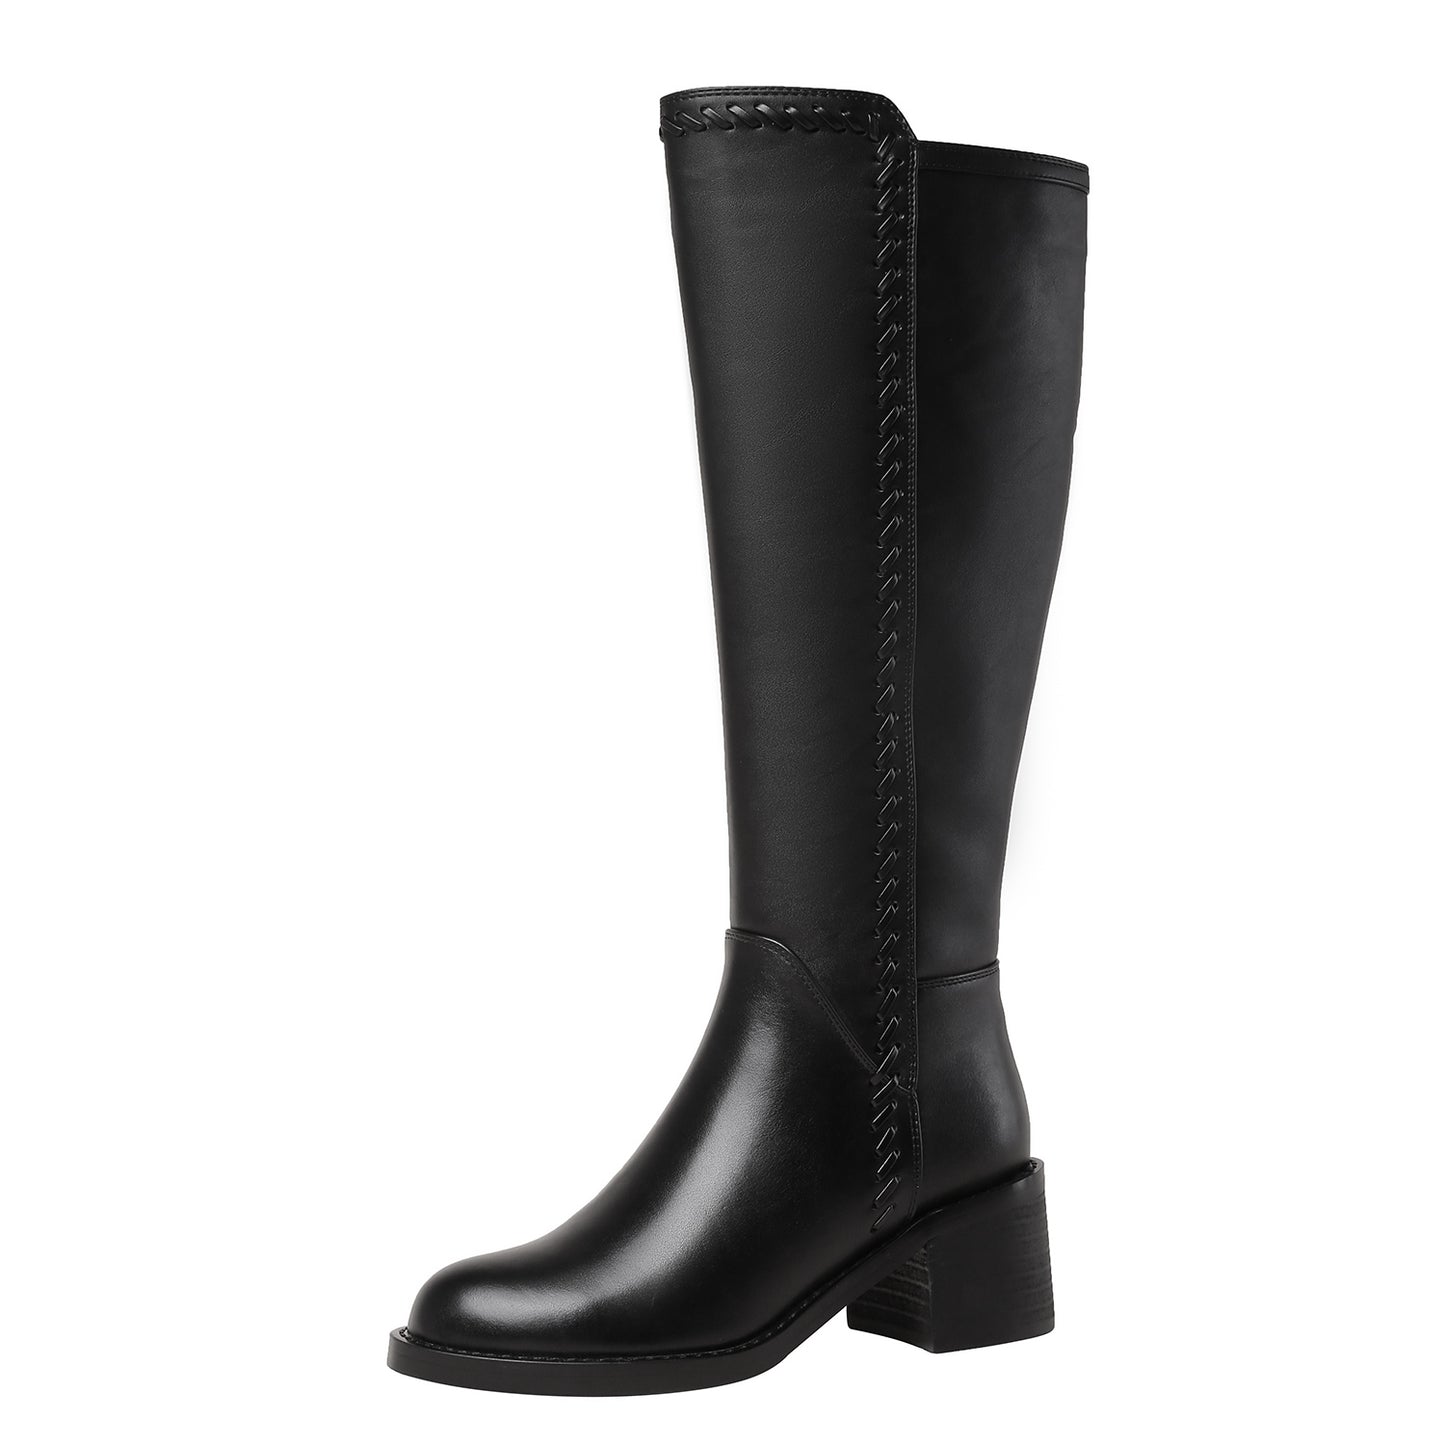 TinaCus Women's Handmade Genuine Leather Round Toe Mid Block Heel Side Zip Up Black Knee High Boots